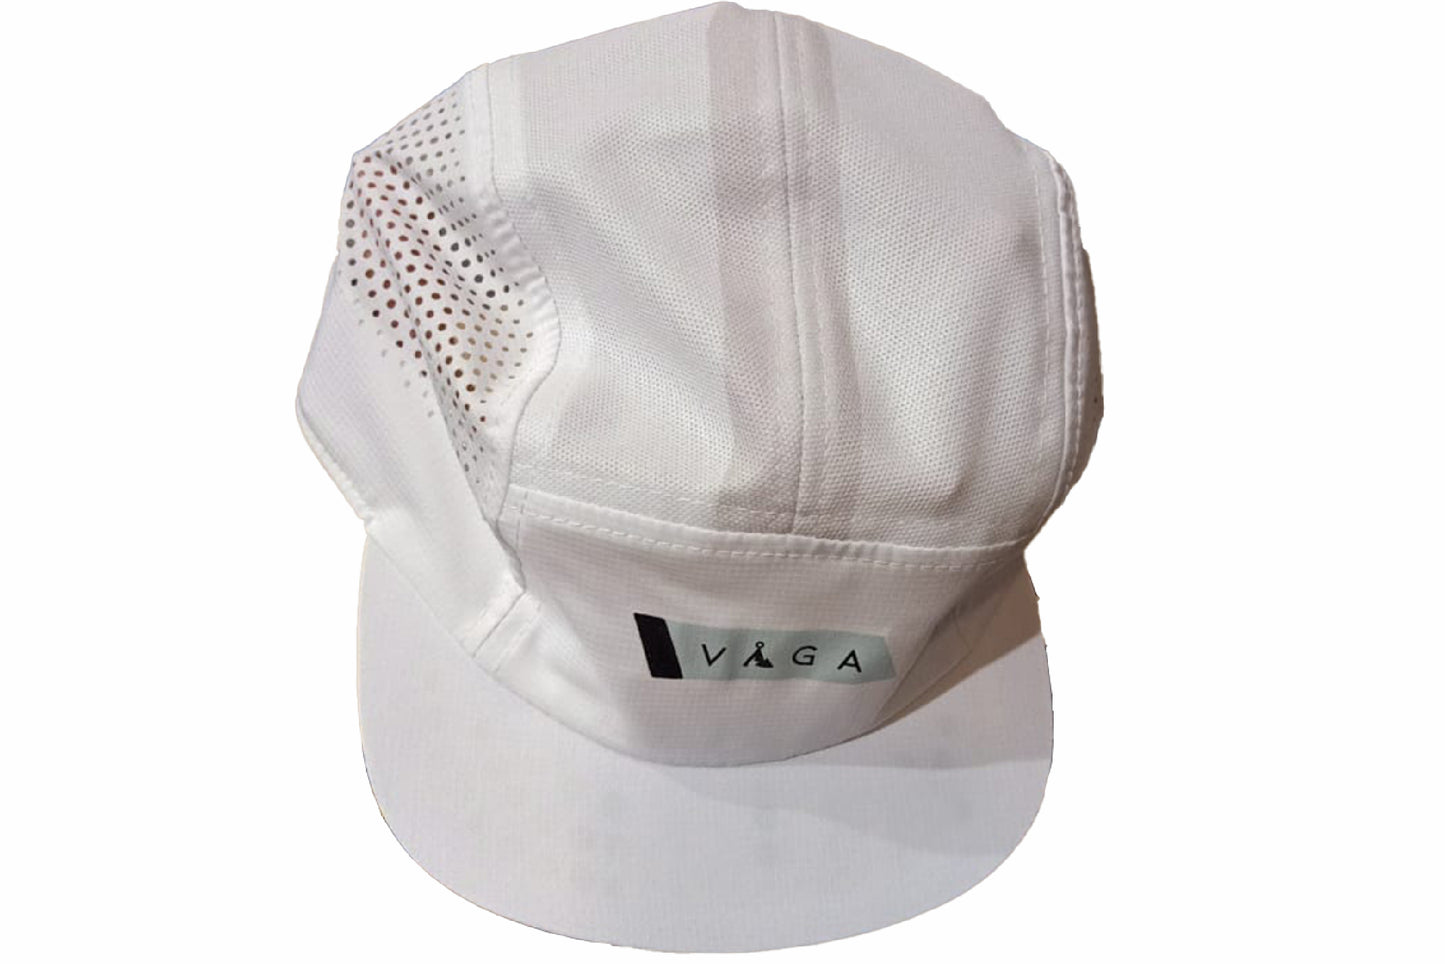 VAGA Feather Racing Cap - White/Mist Grey/Black